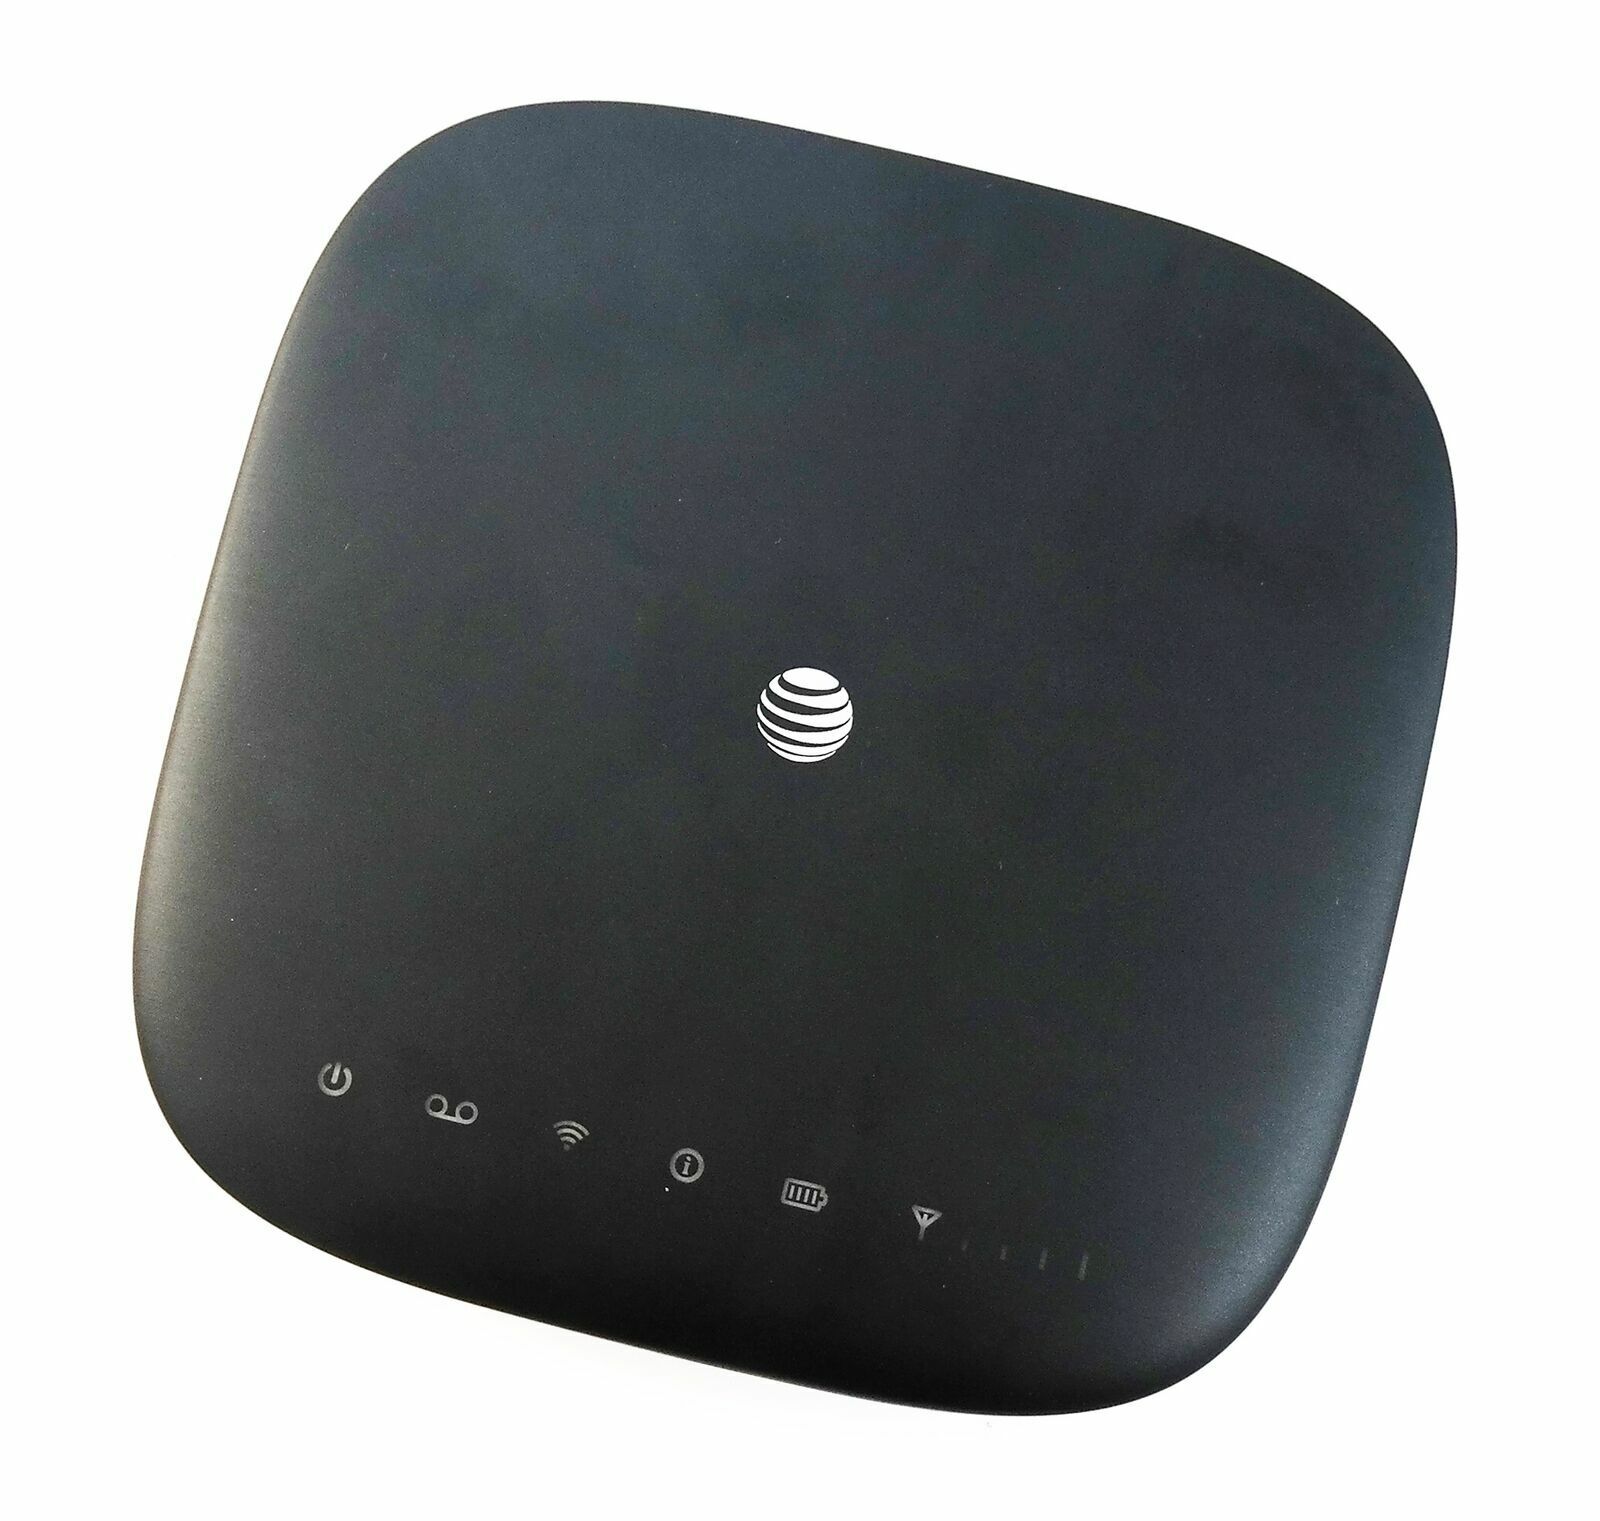 ZTE MF279 Home Wireless Internet Base Router(ATT) A no battery